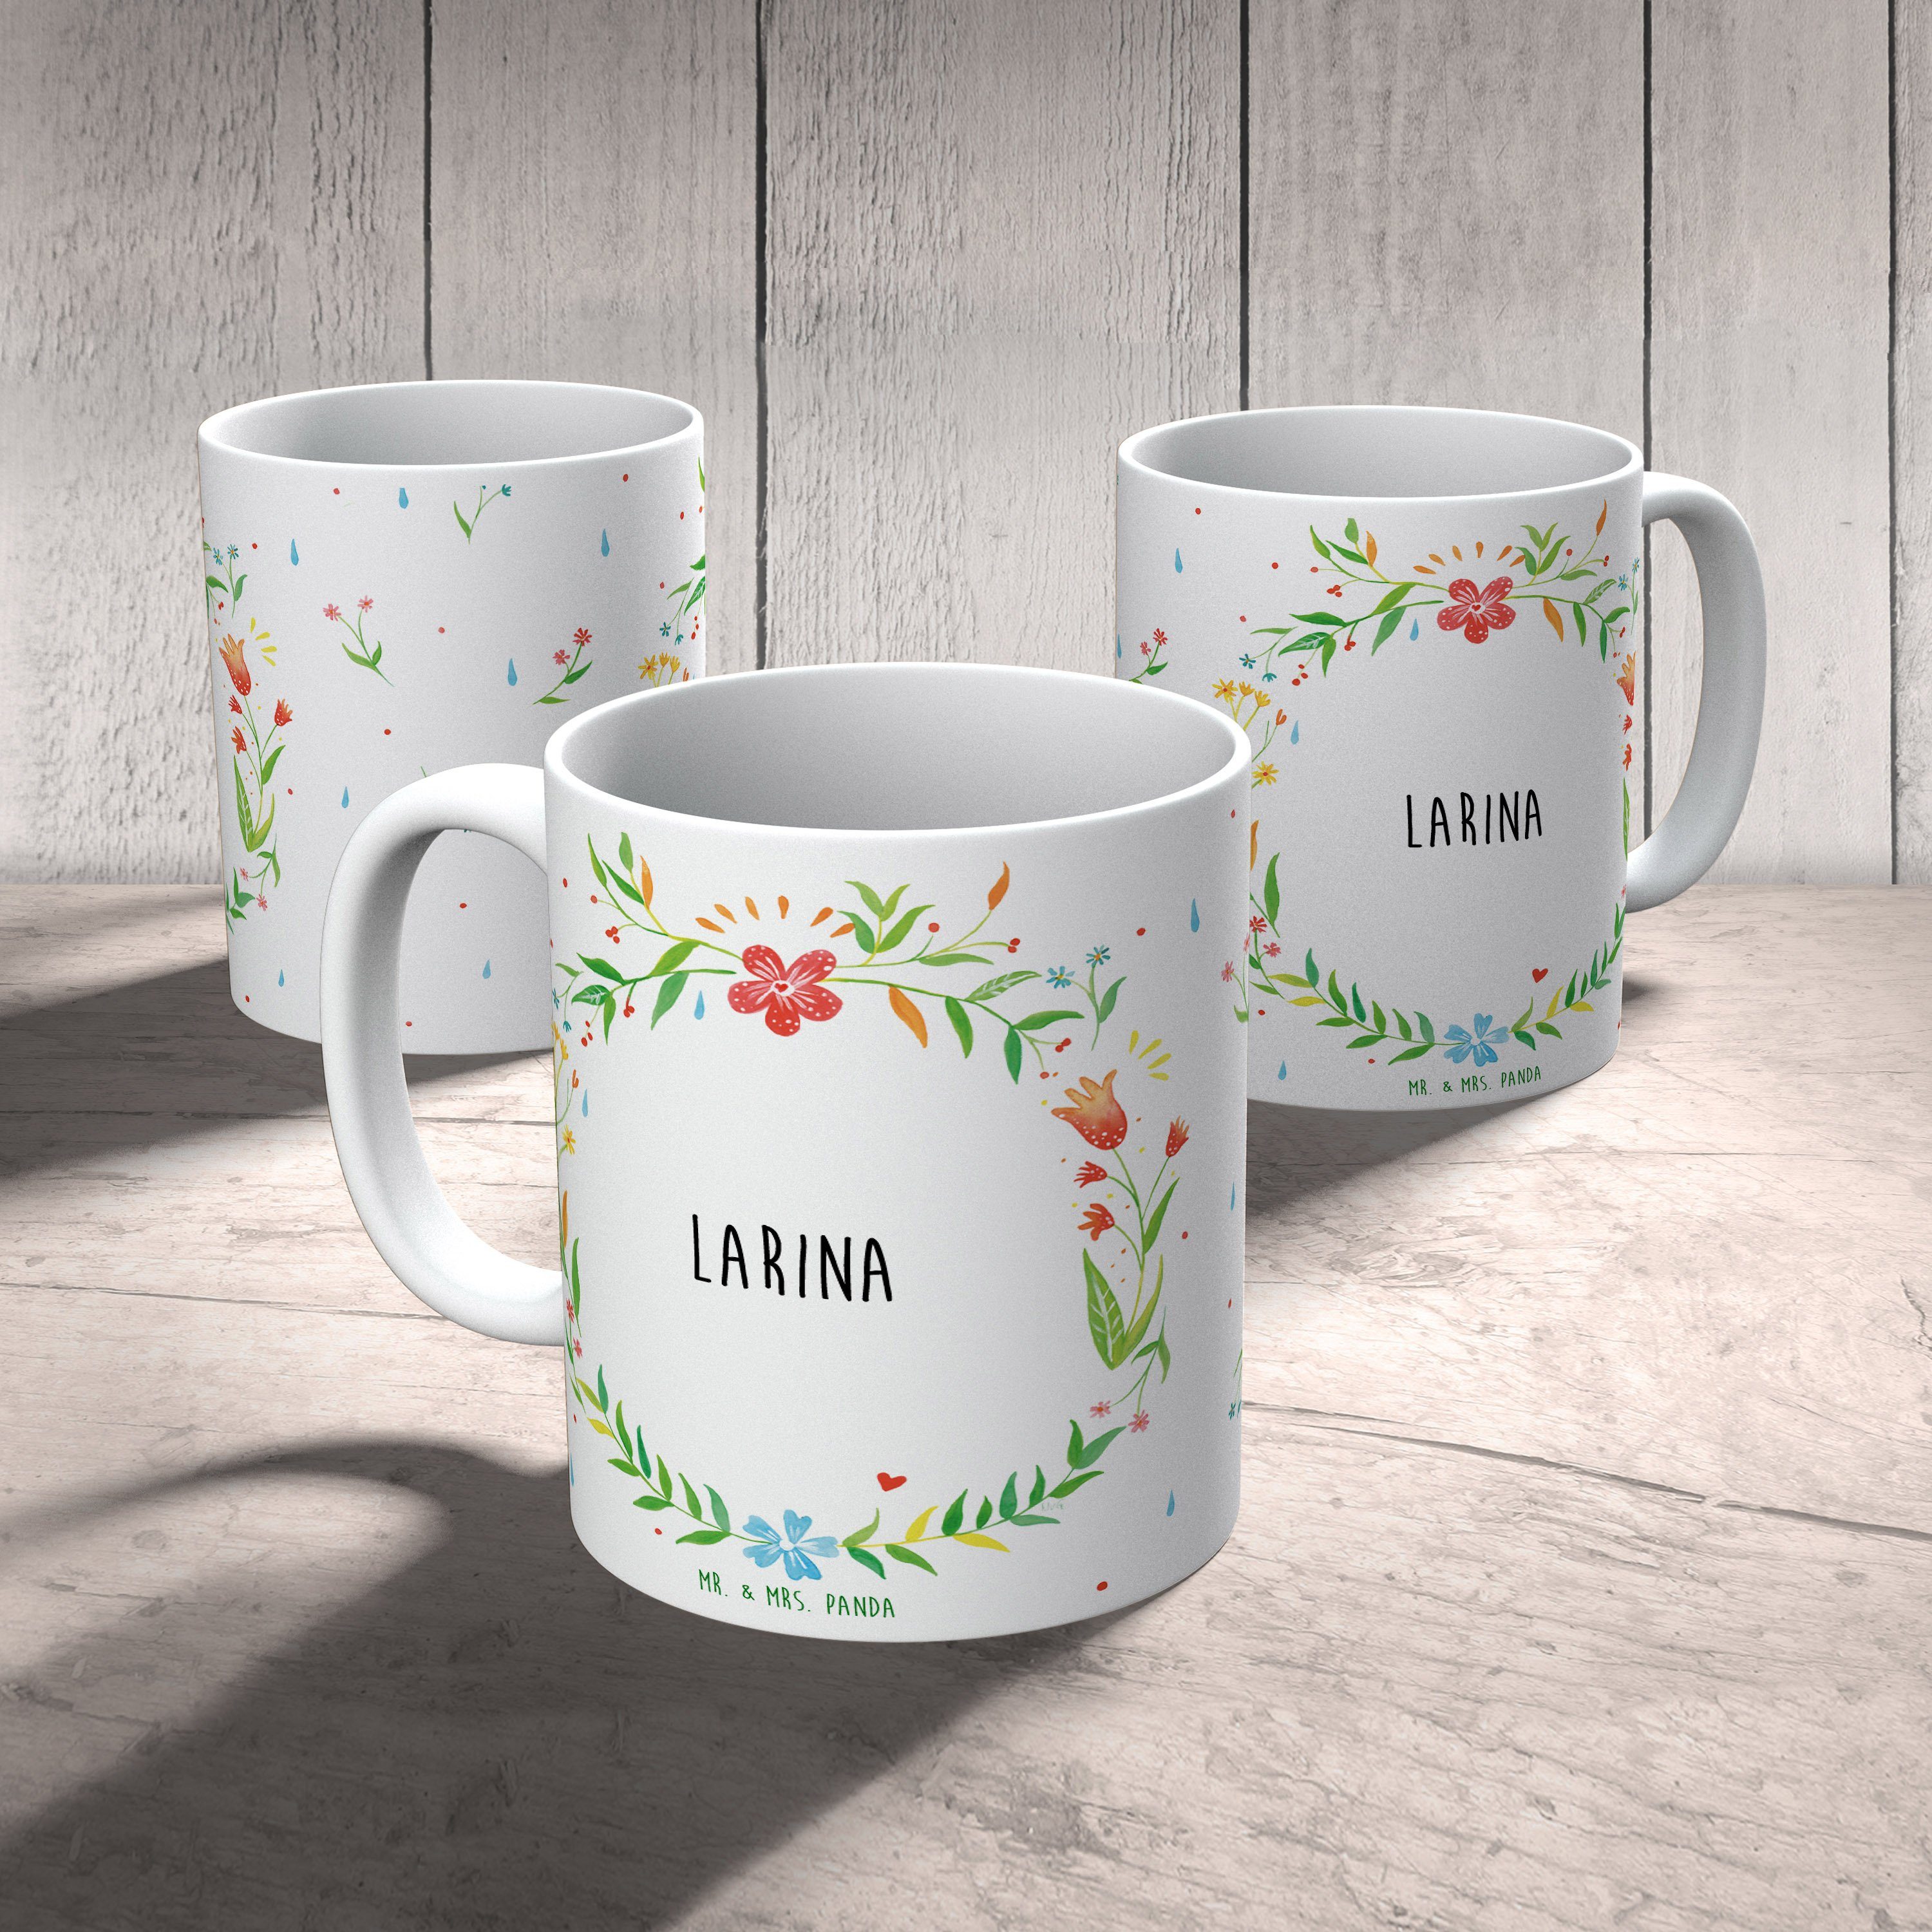 Mr. & Mrs. - Kaffeebecher, Geschenk, Motive, Larina Keramiktasse, Tasse Panda Keramik Becher, Tasse